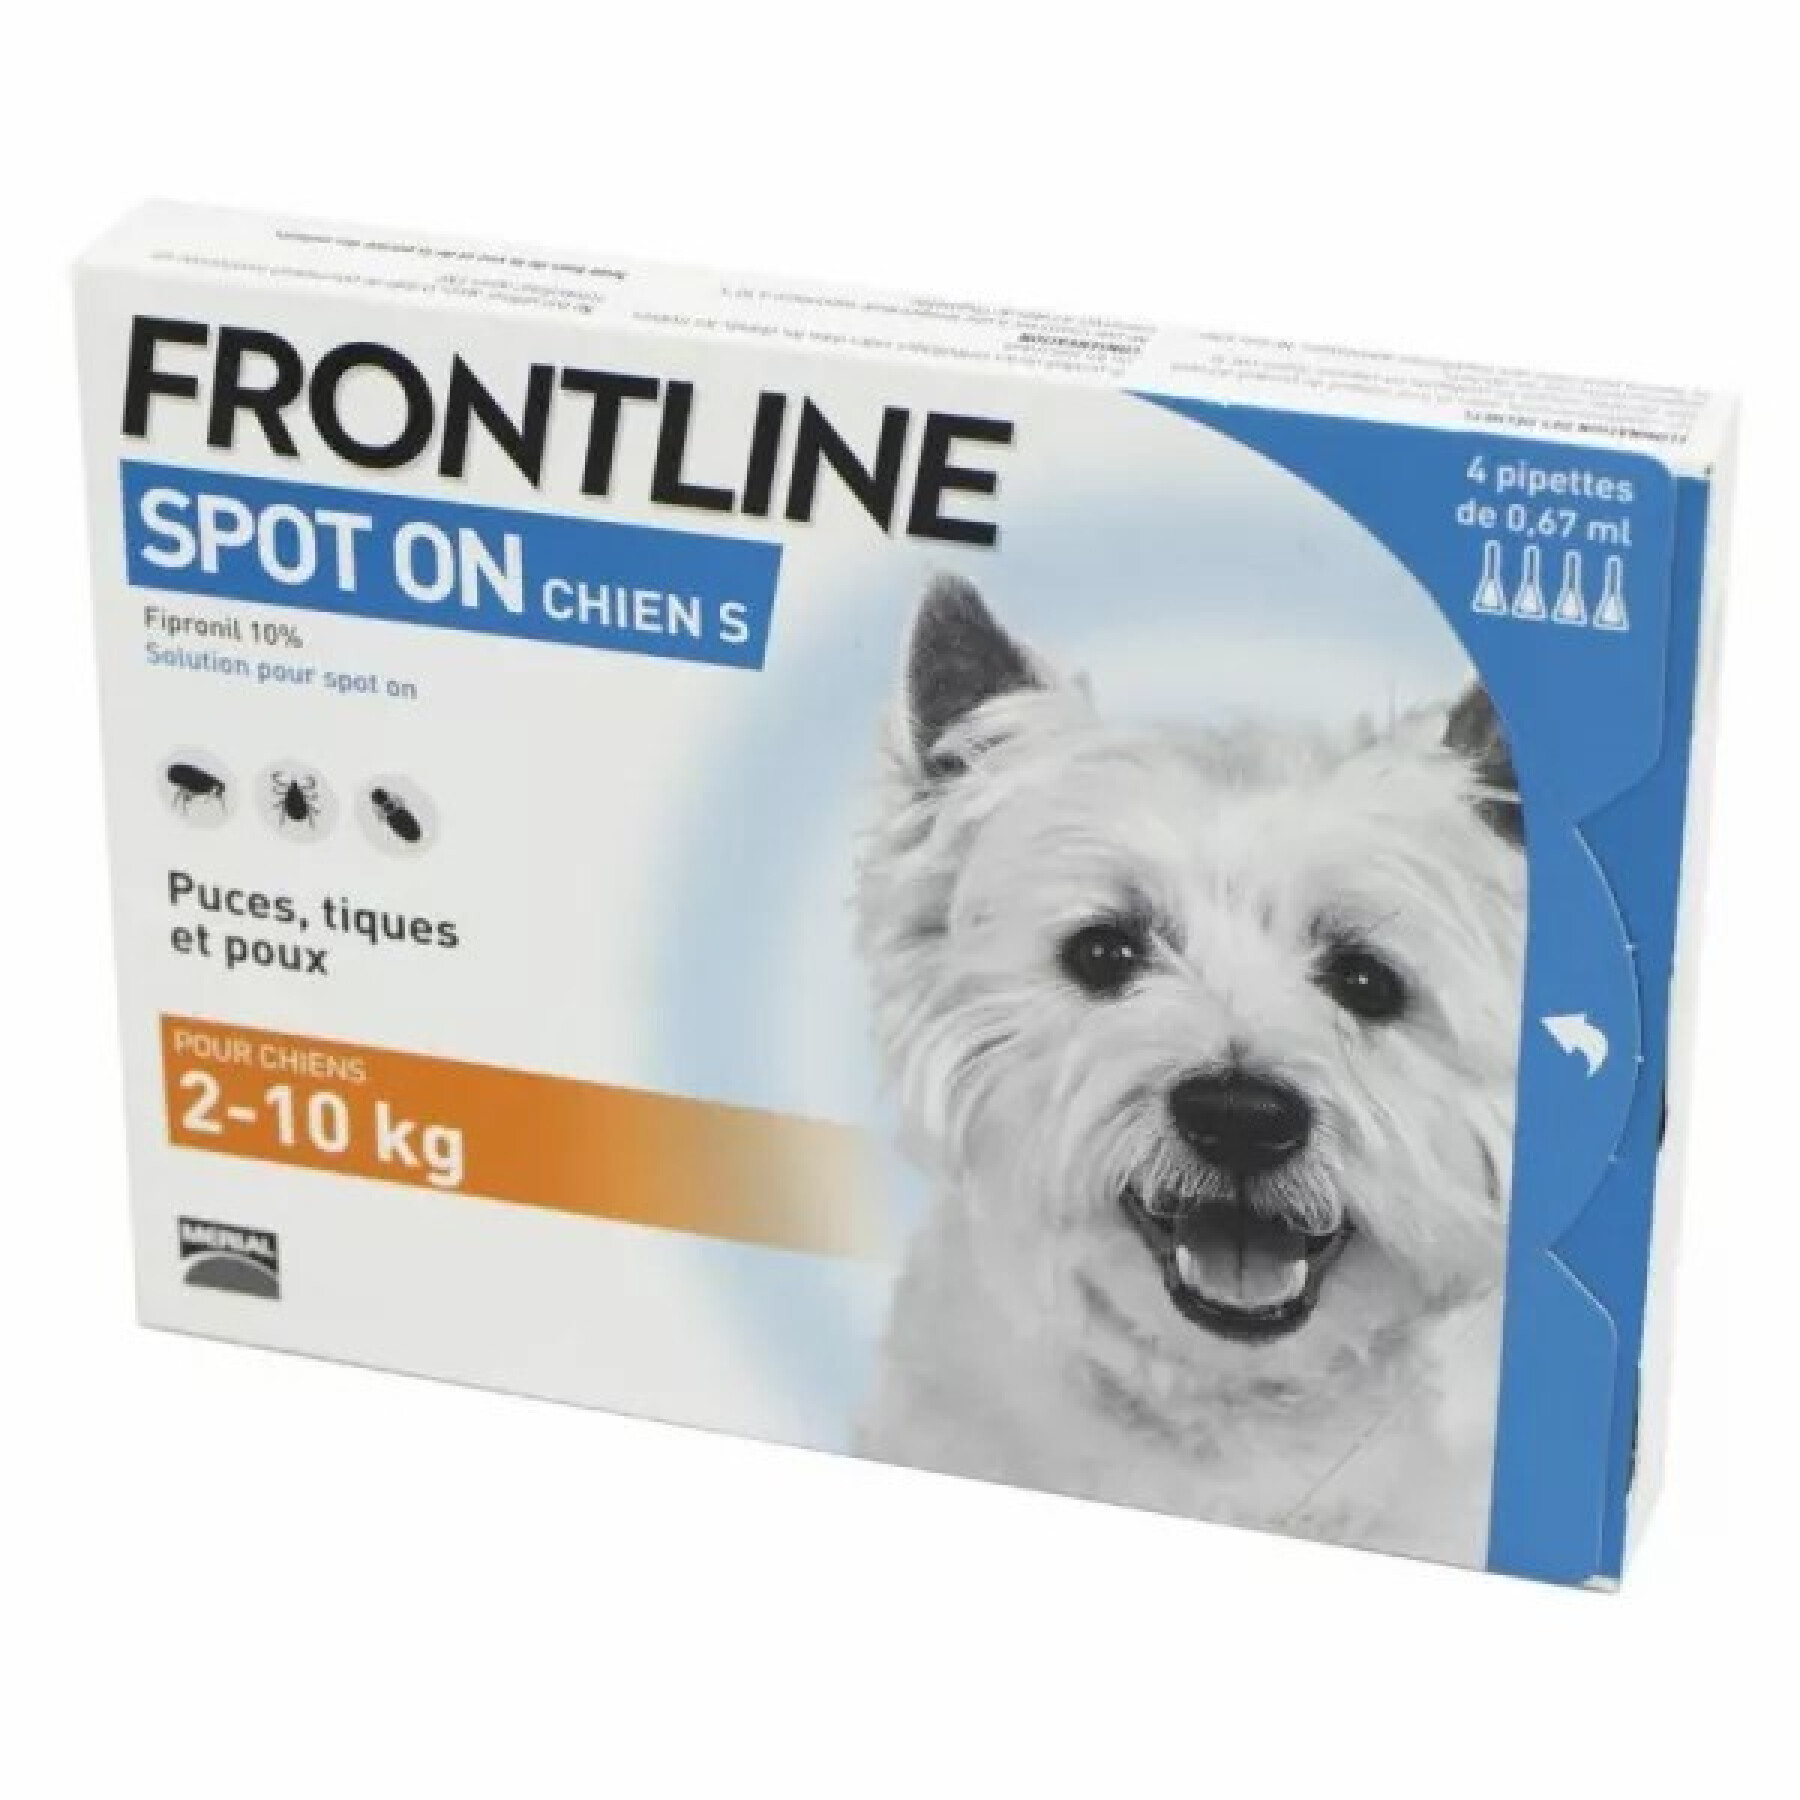 Pest control for dogs Frontline de 2/10 kg Spot On (x4)